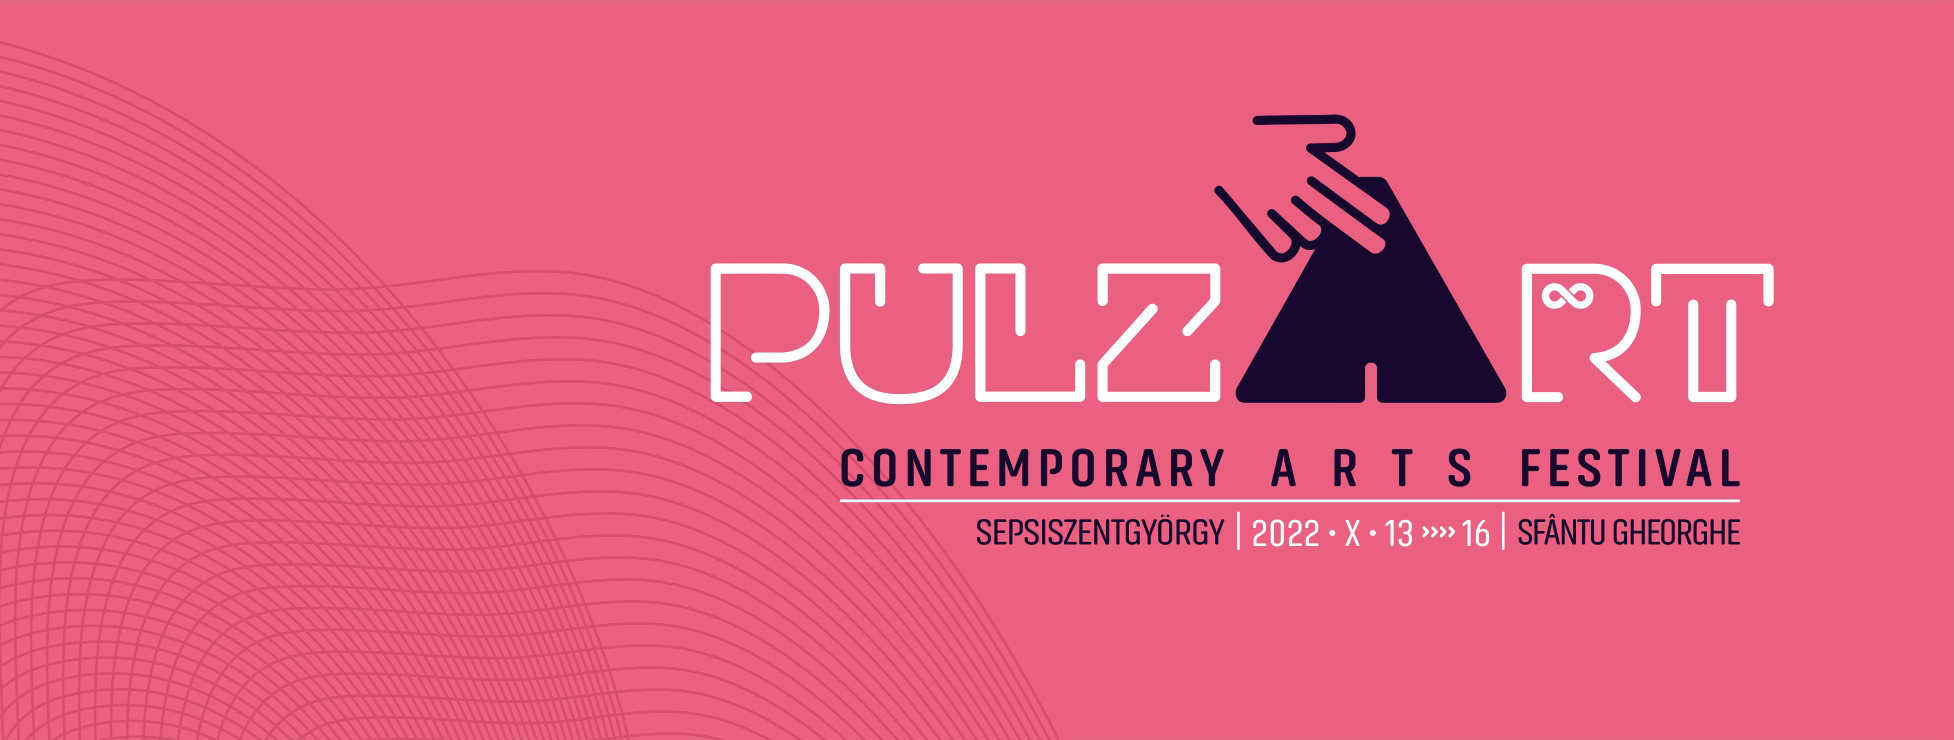 PulzArt - Contemporary art festival